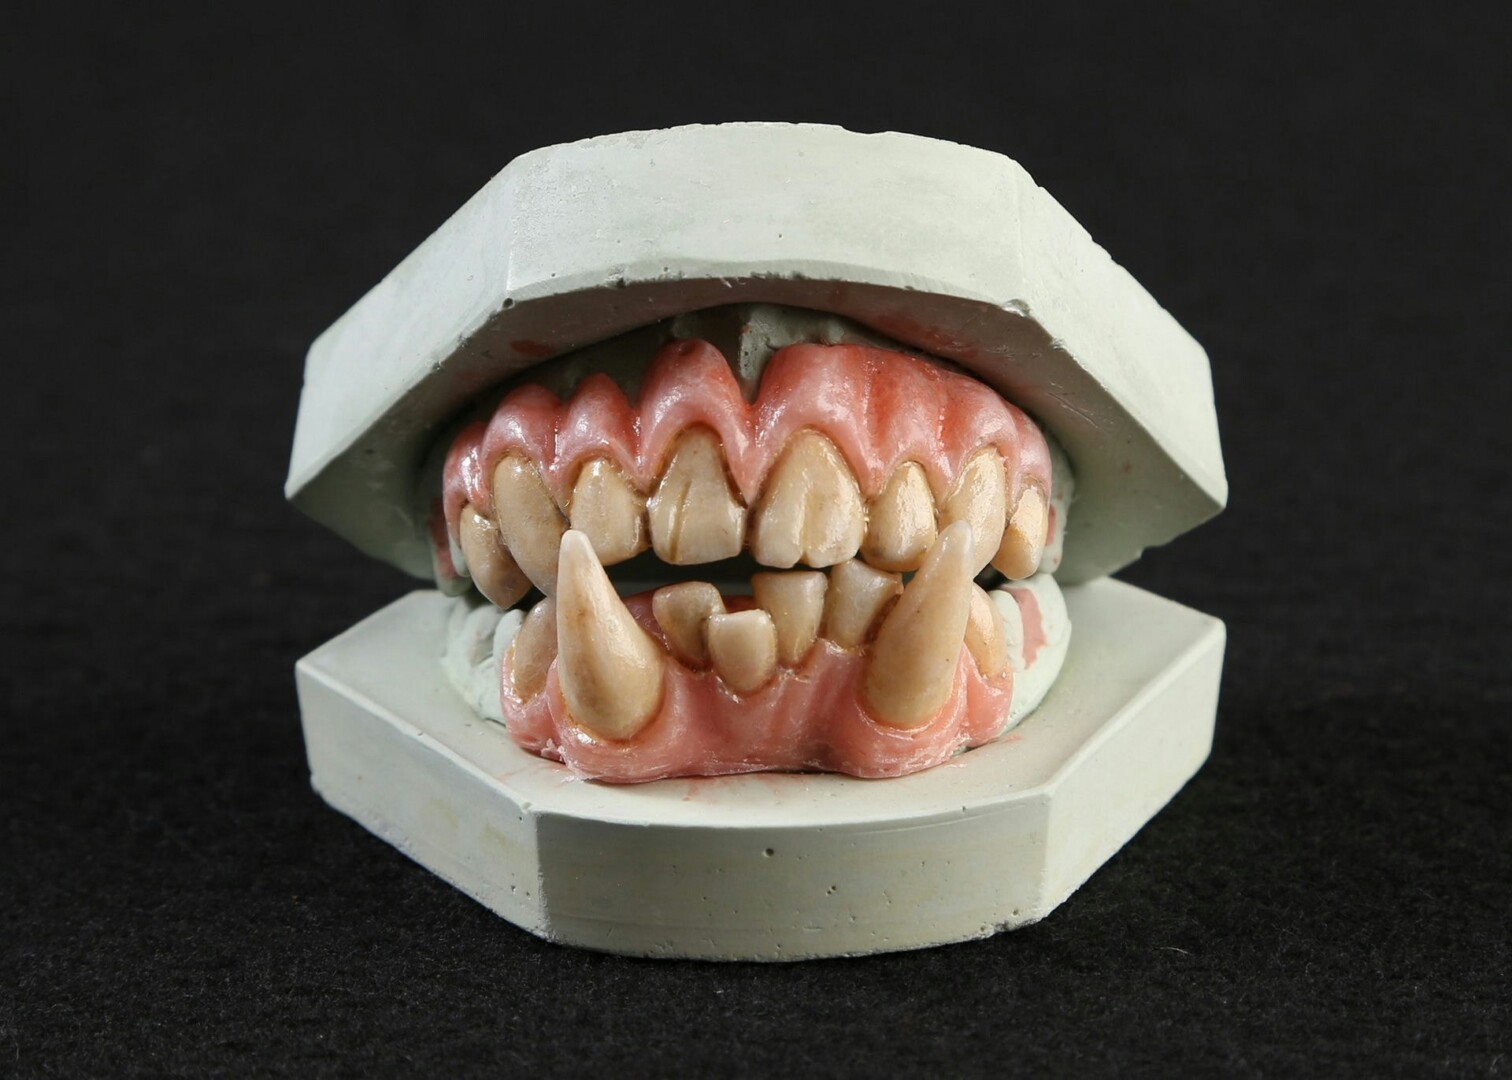 A large model of sharp, inhuman teeth.